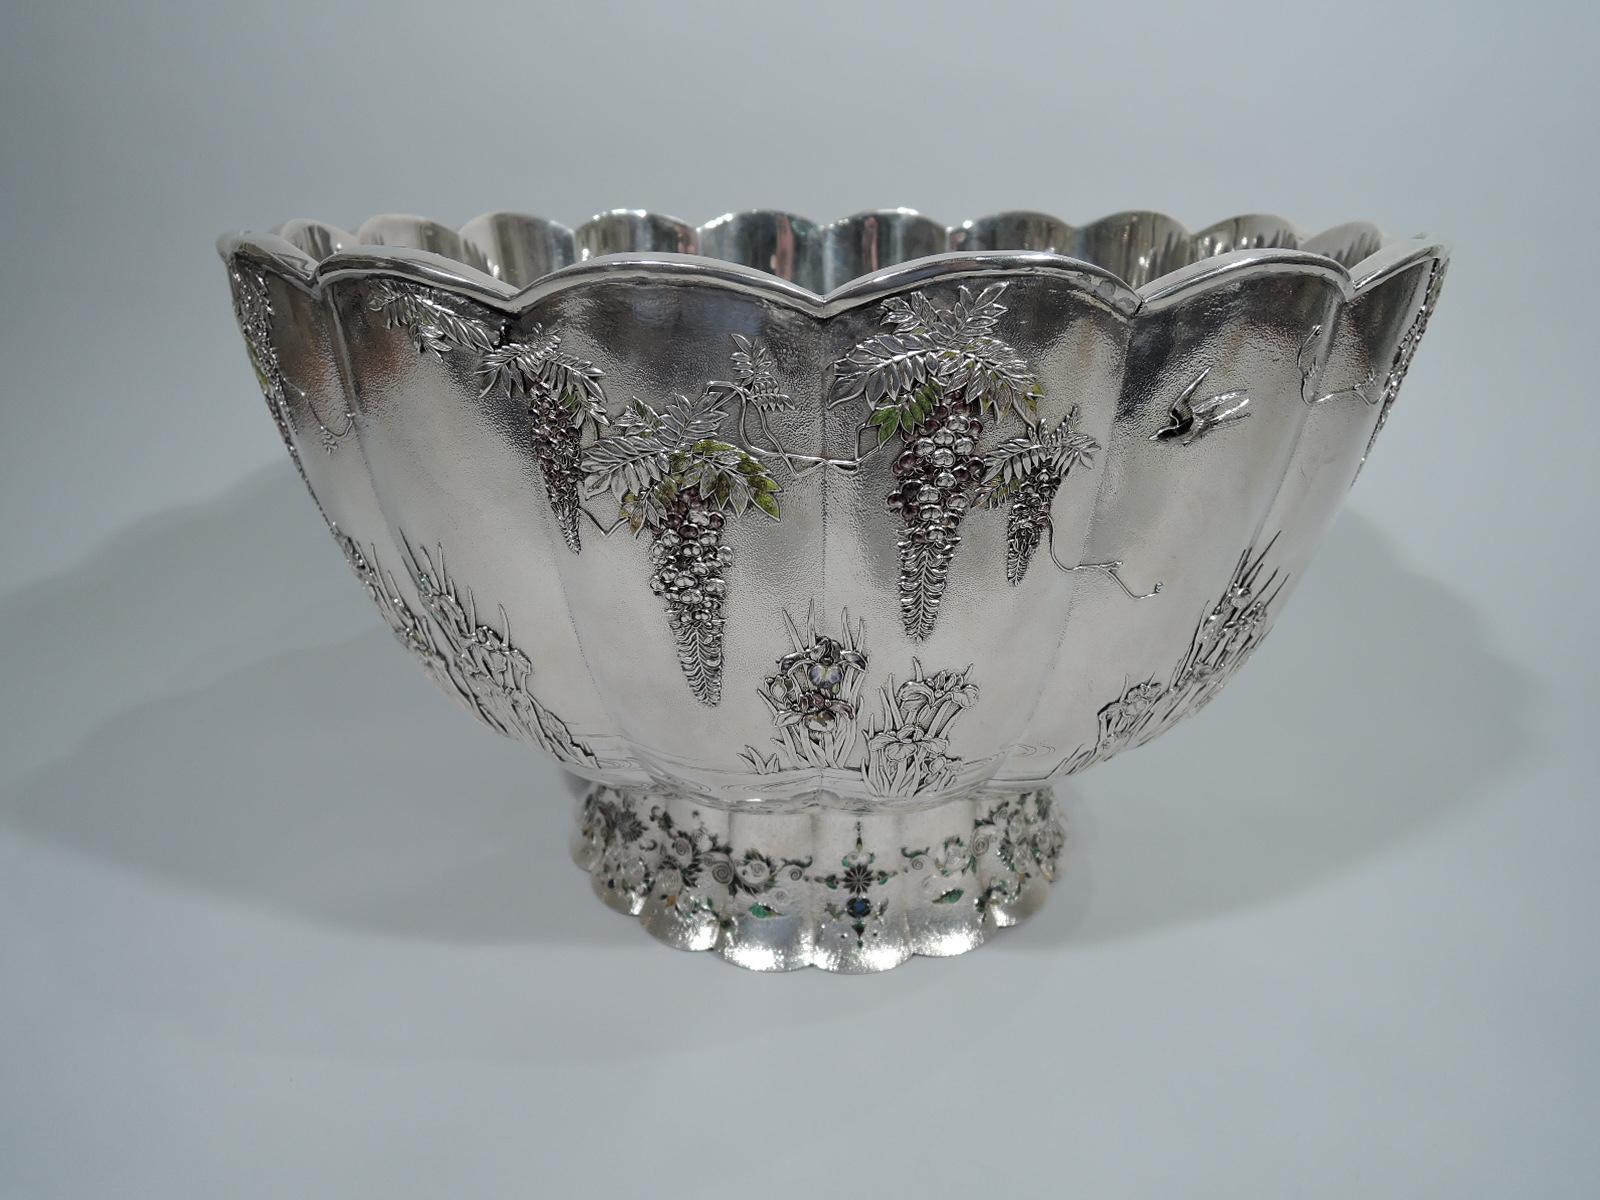 Meiji Antique Japanese Silver and Enamel Centerpiece Bowl wtih World's Fair Provenance